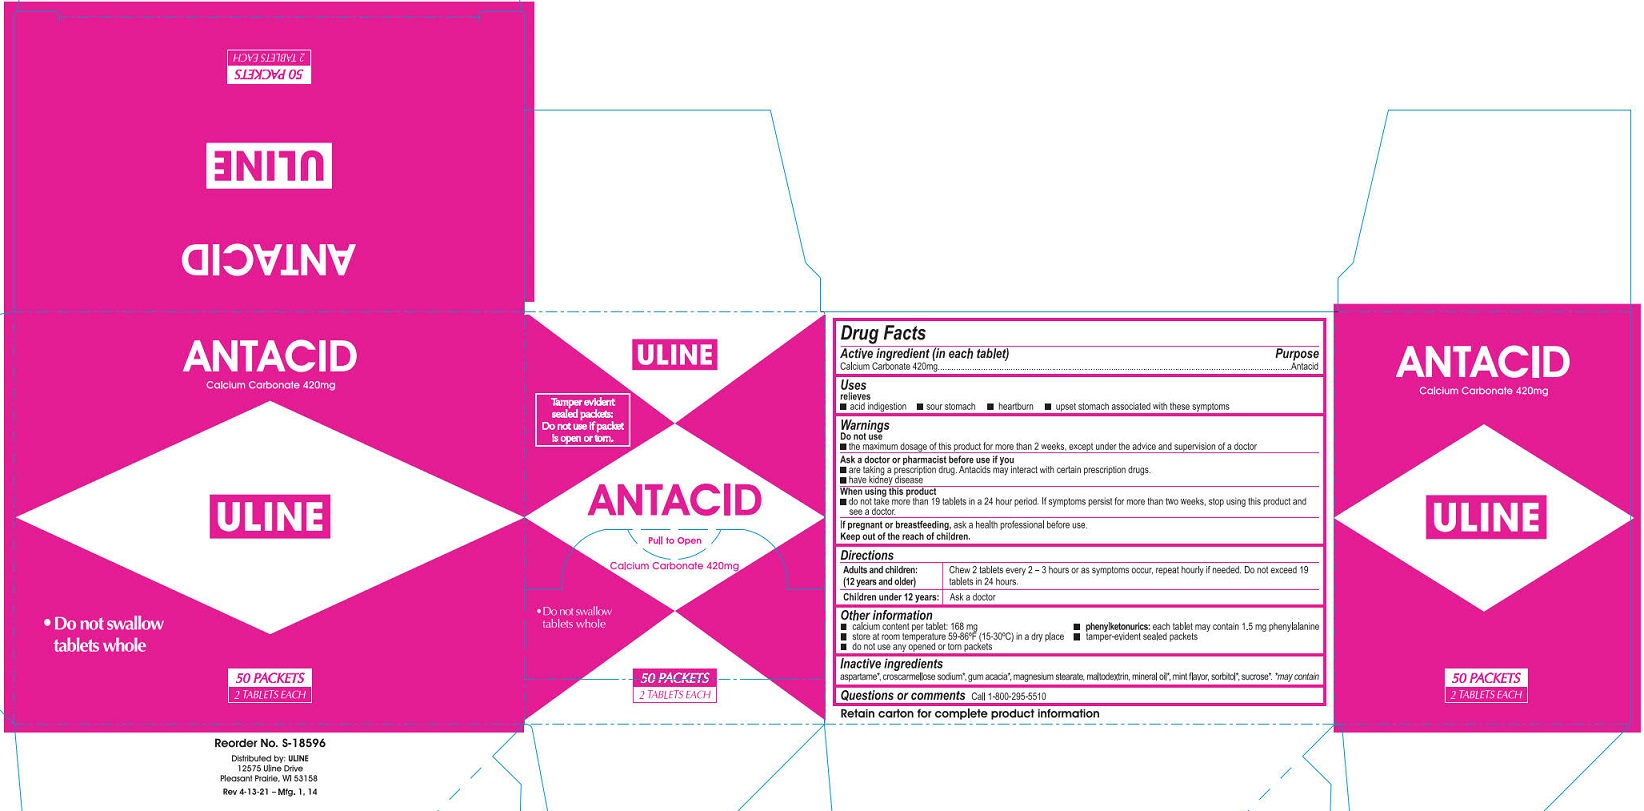 Uline Antacid rev 4-13-21 Label